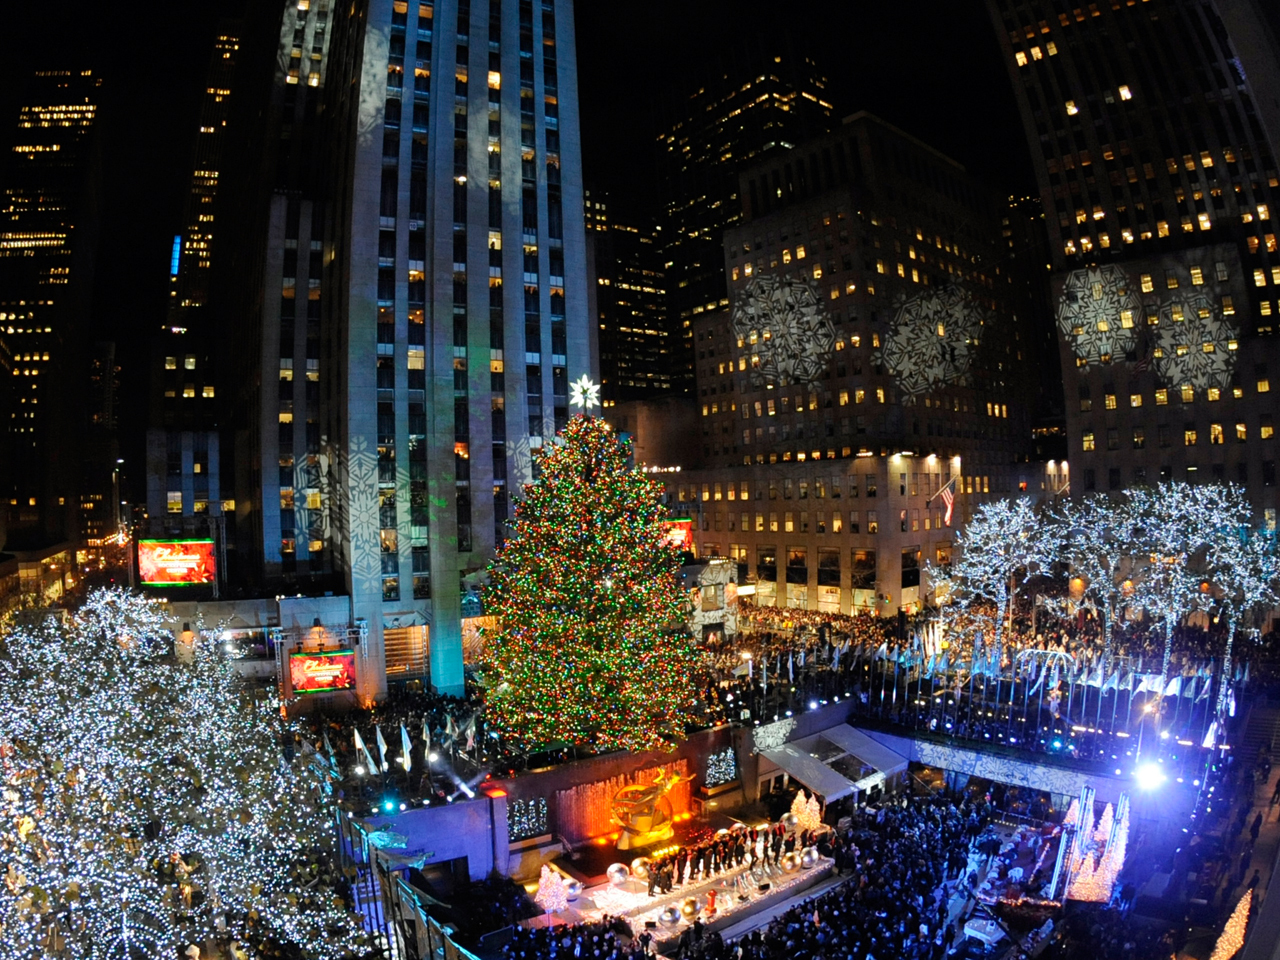 Rockefeller Center Christmas Tree 2011 - Photo 9 - Pictures - CBS News